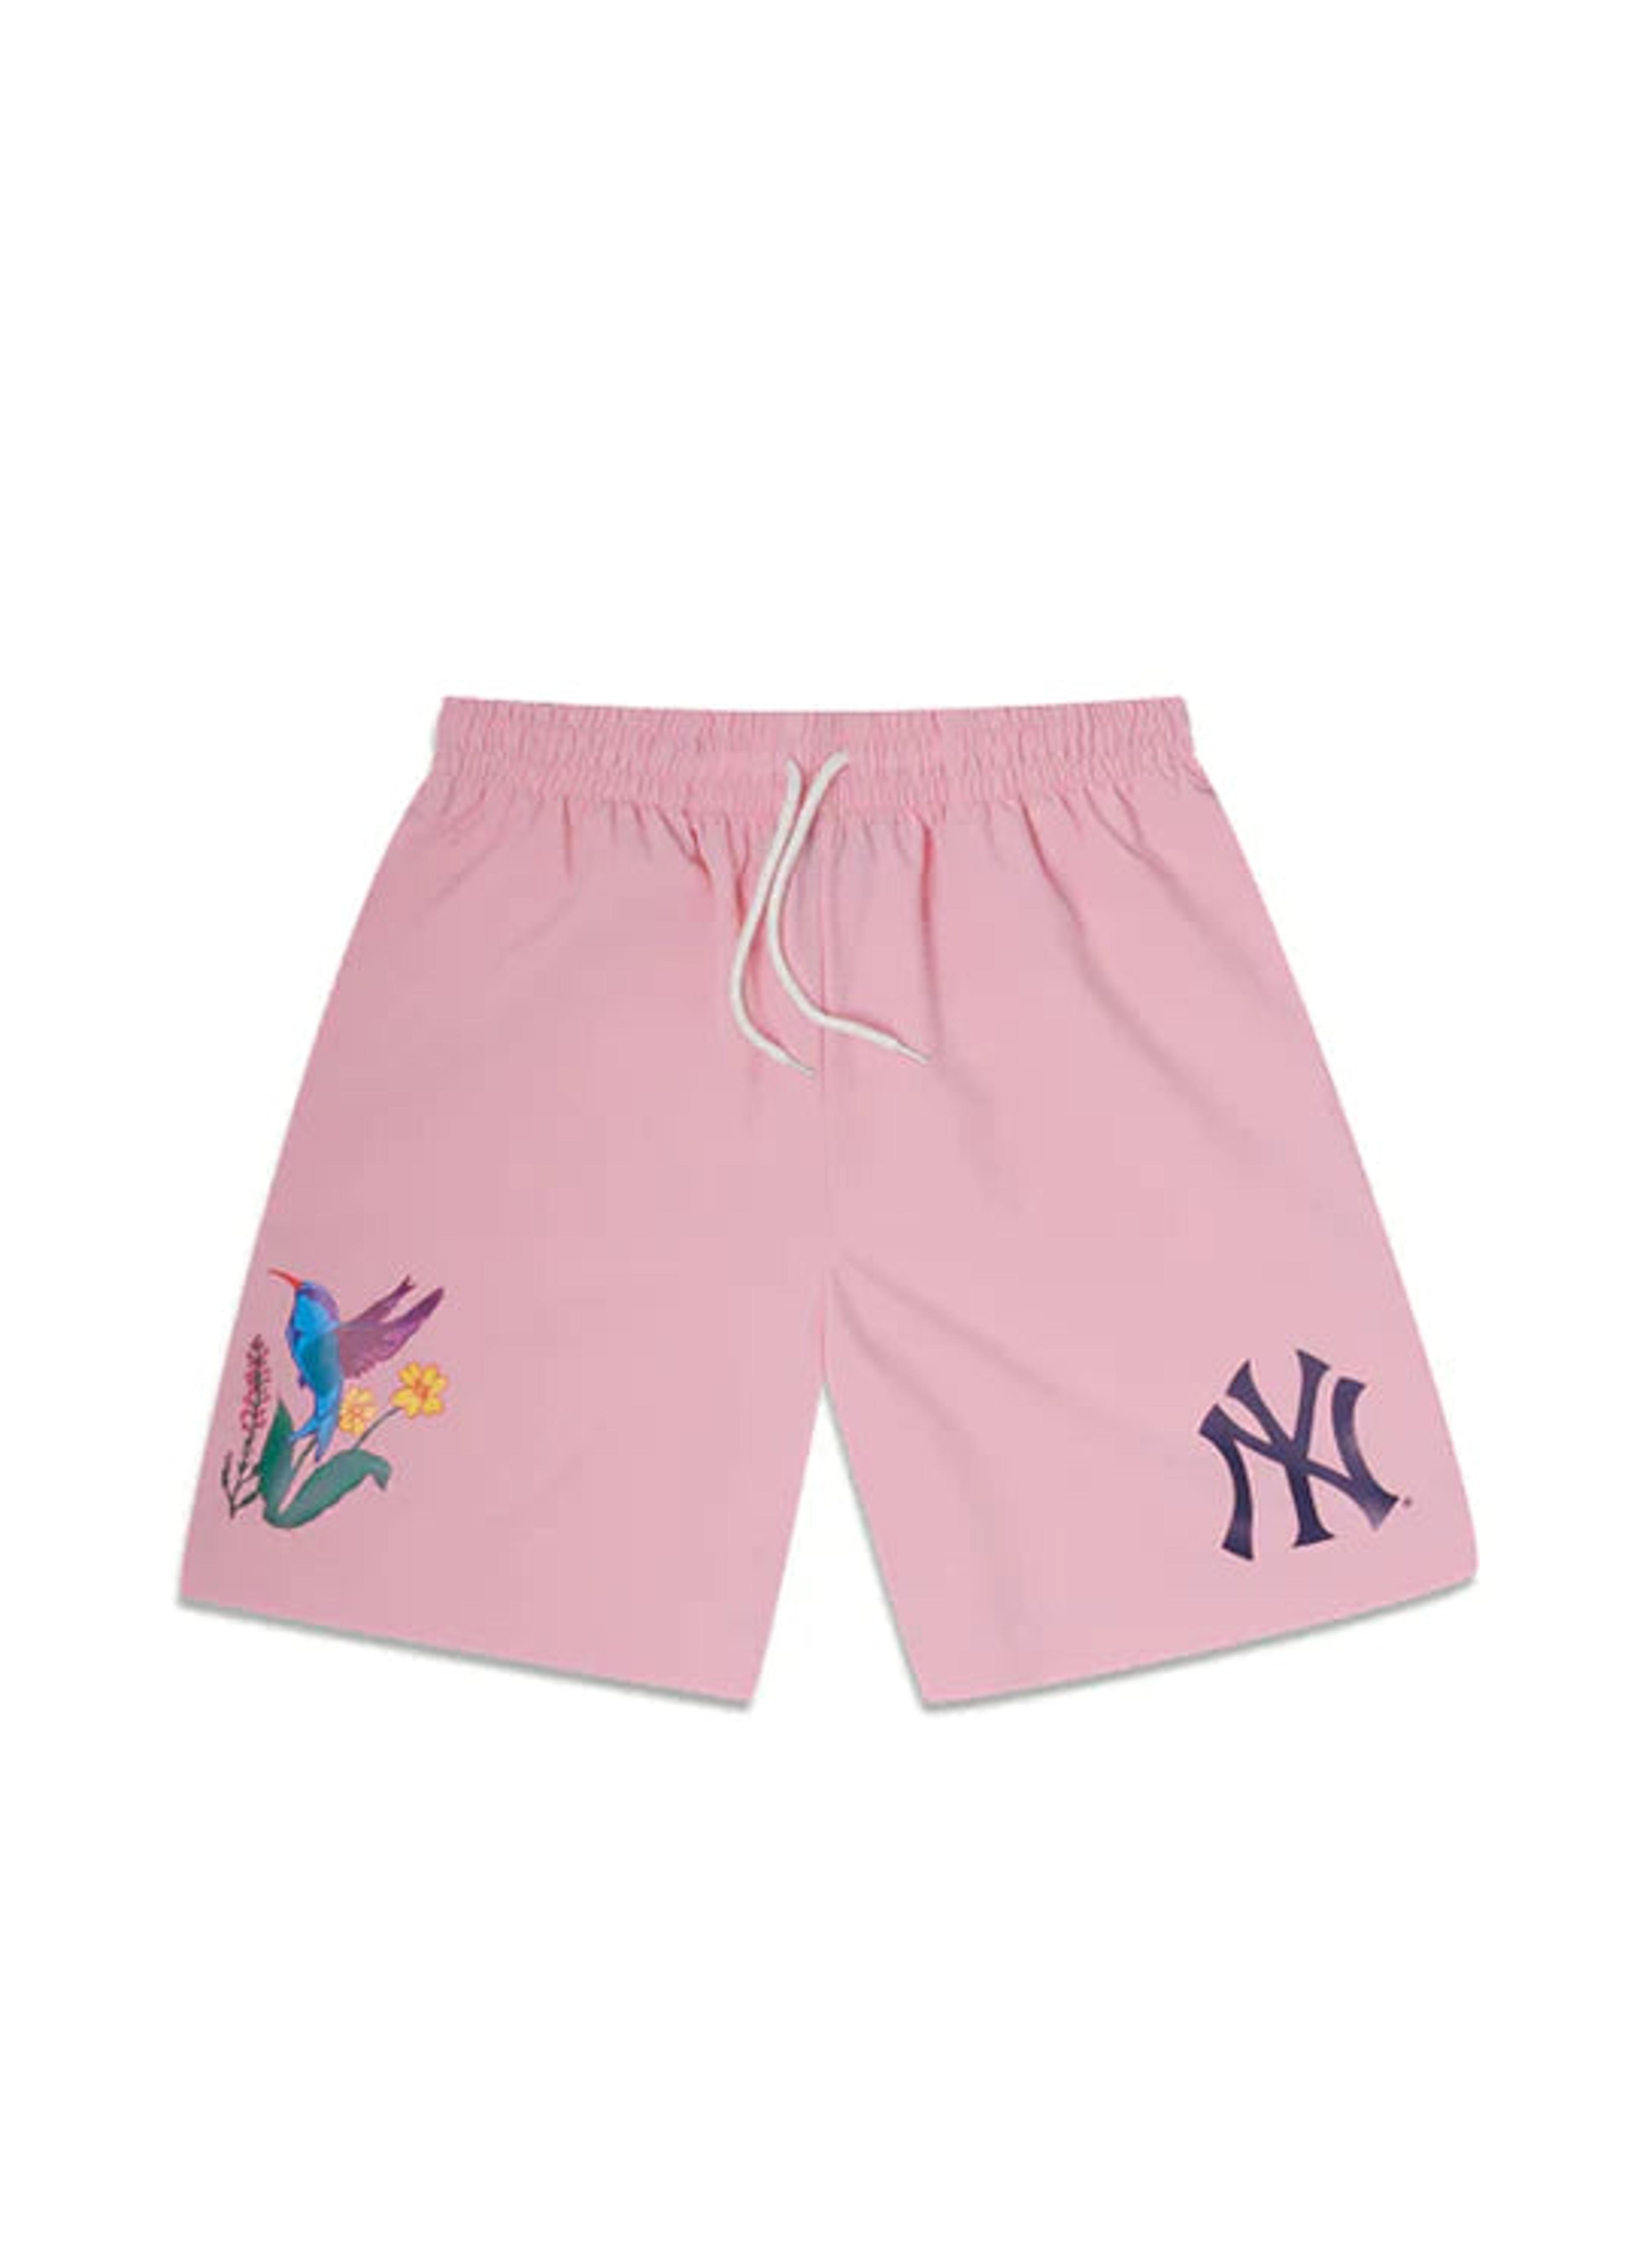 New Era New York Yankees Blooming Shorts - Pink